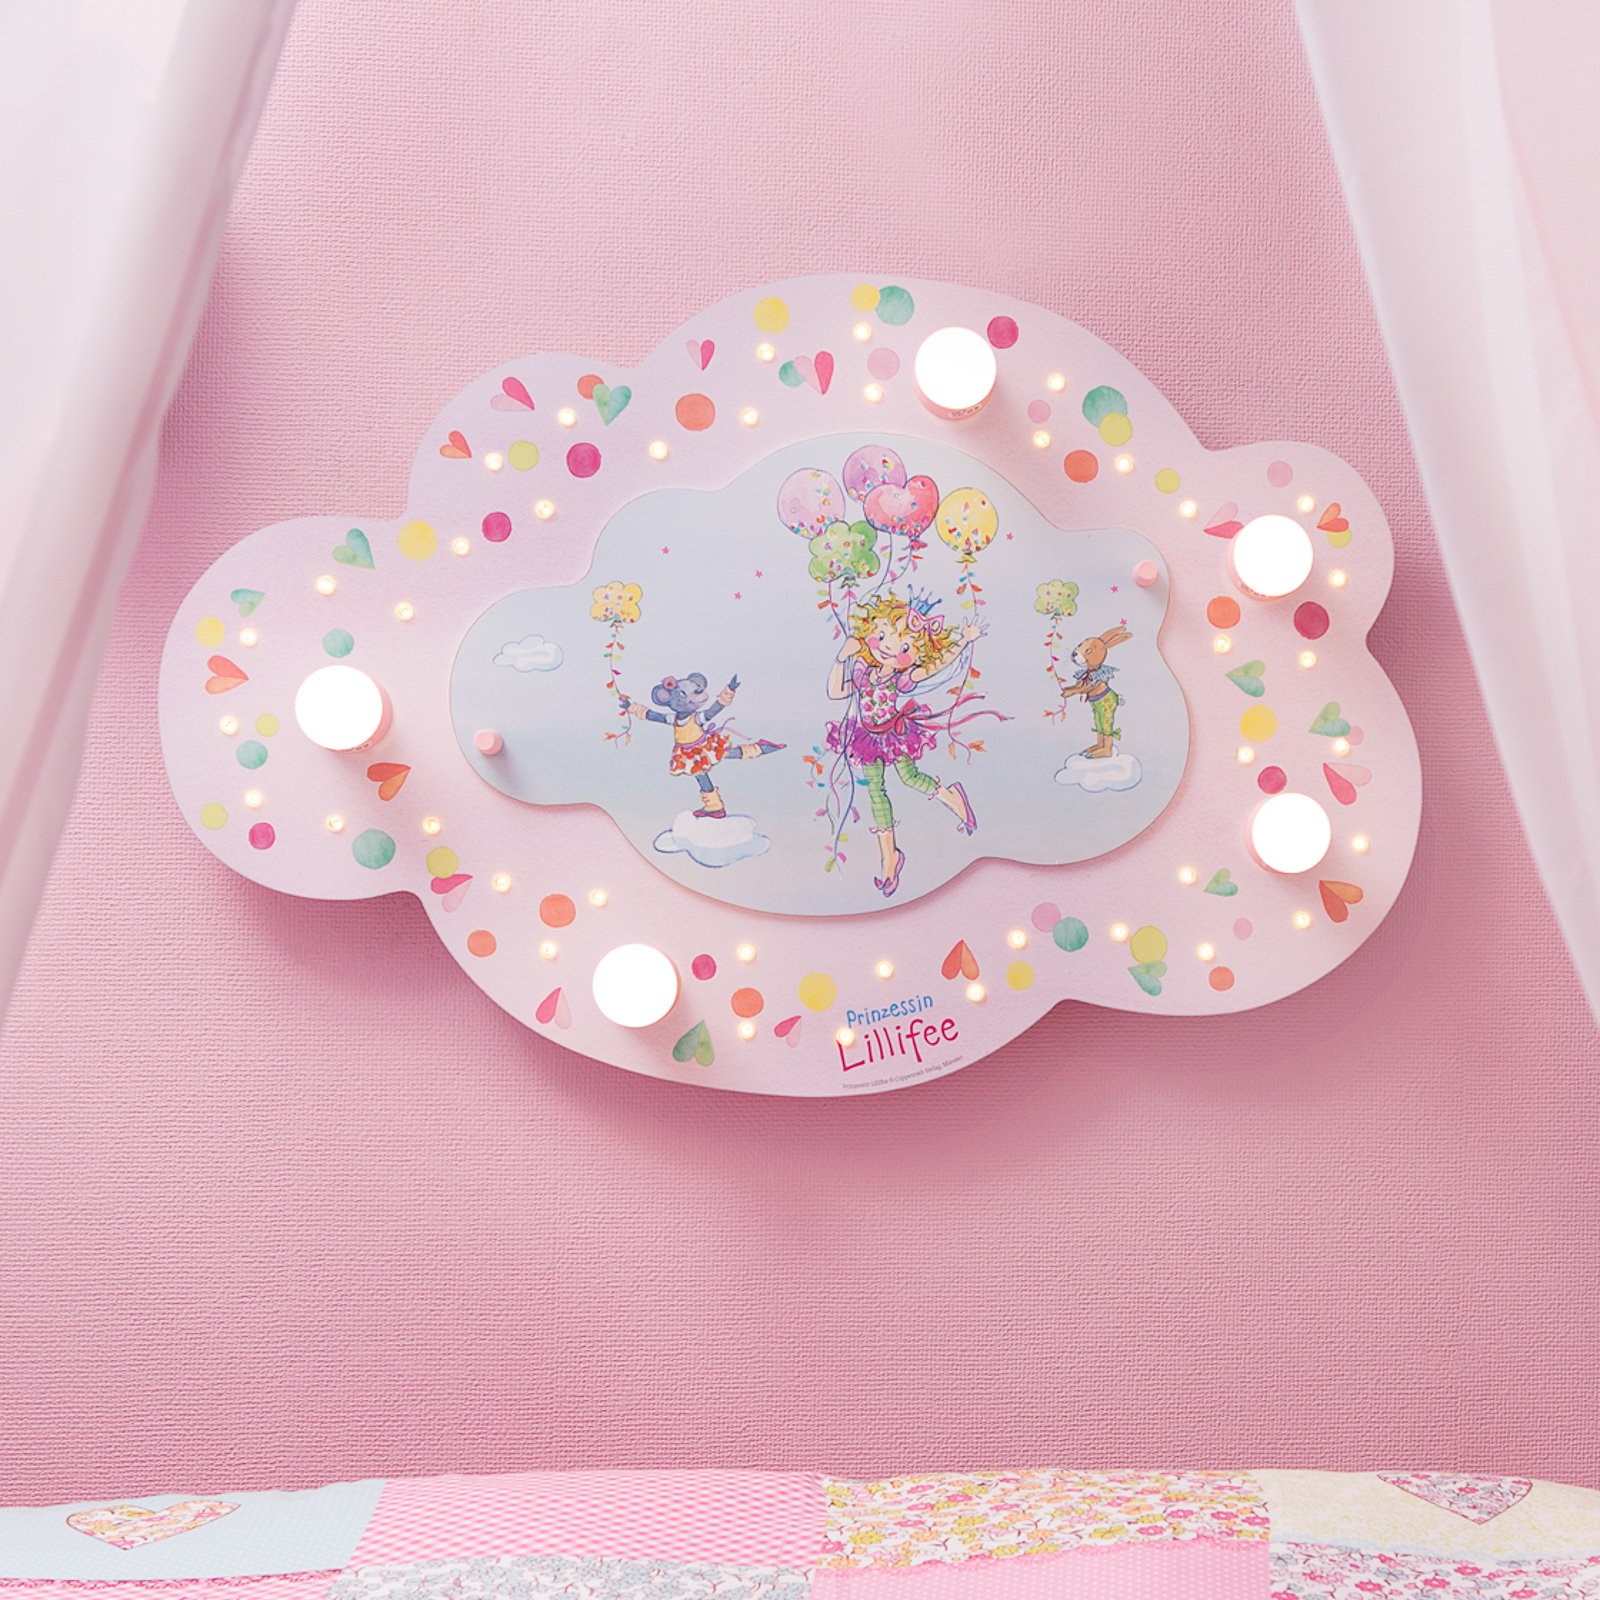 Princess Lillifee ceiling light with LEDs, cloud